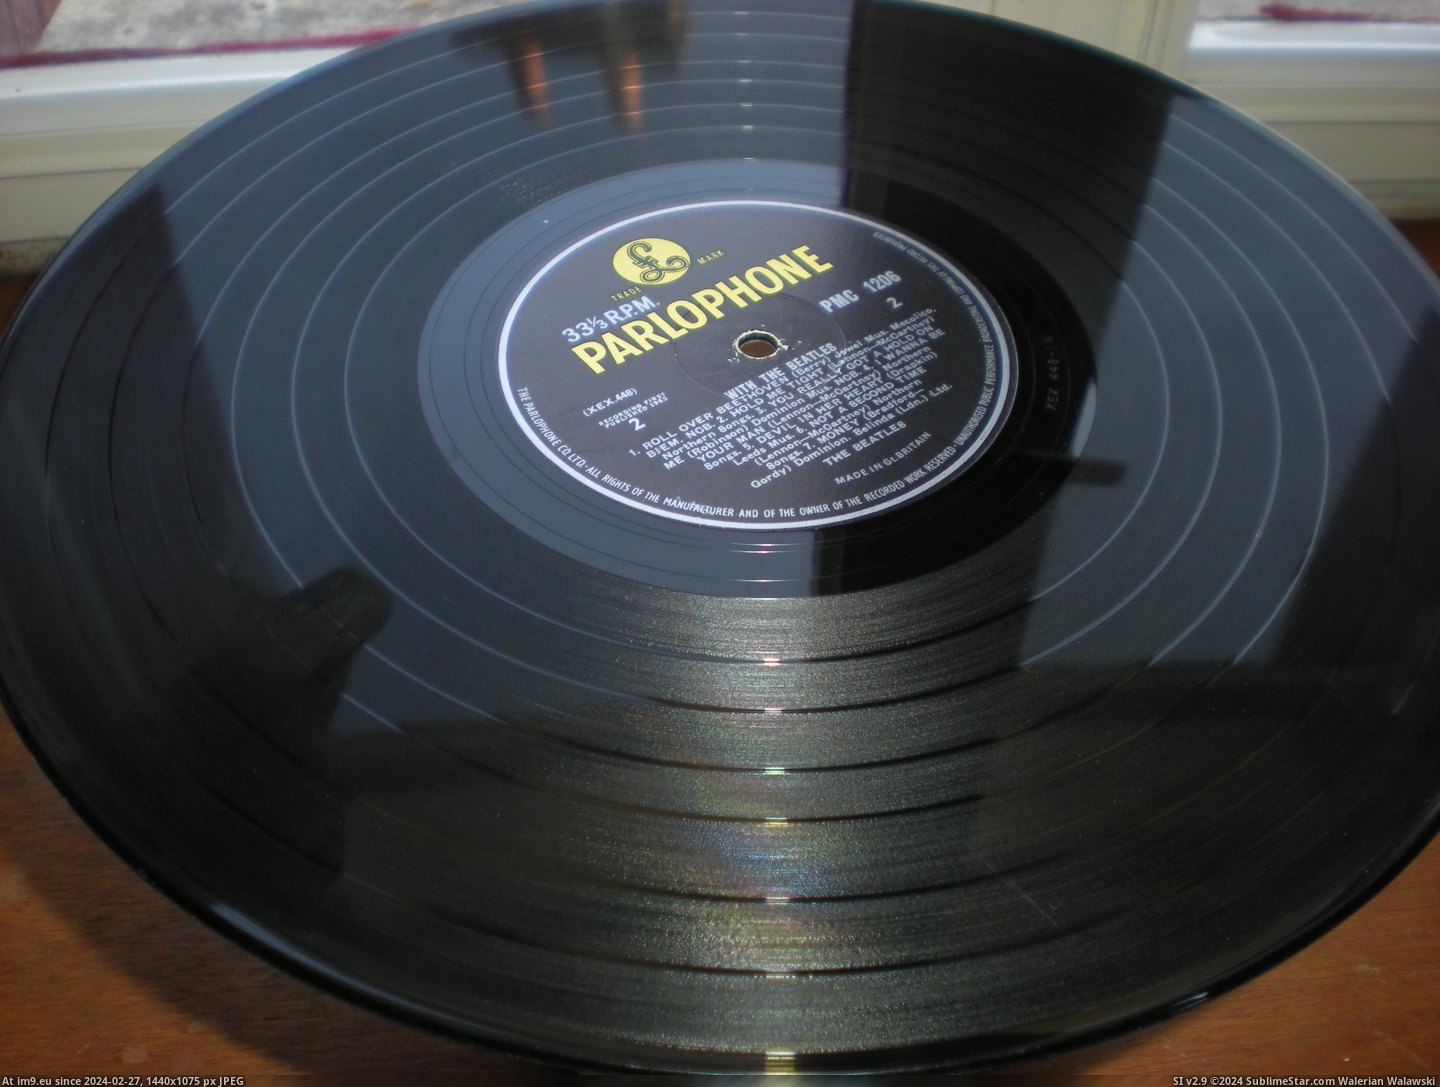 #Records #Vinyl #Record With The 22-8 4 Pic. (Obraz z album new 1))